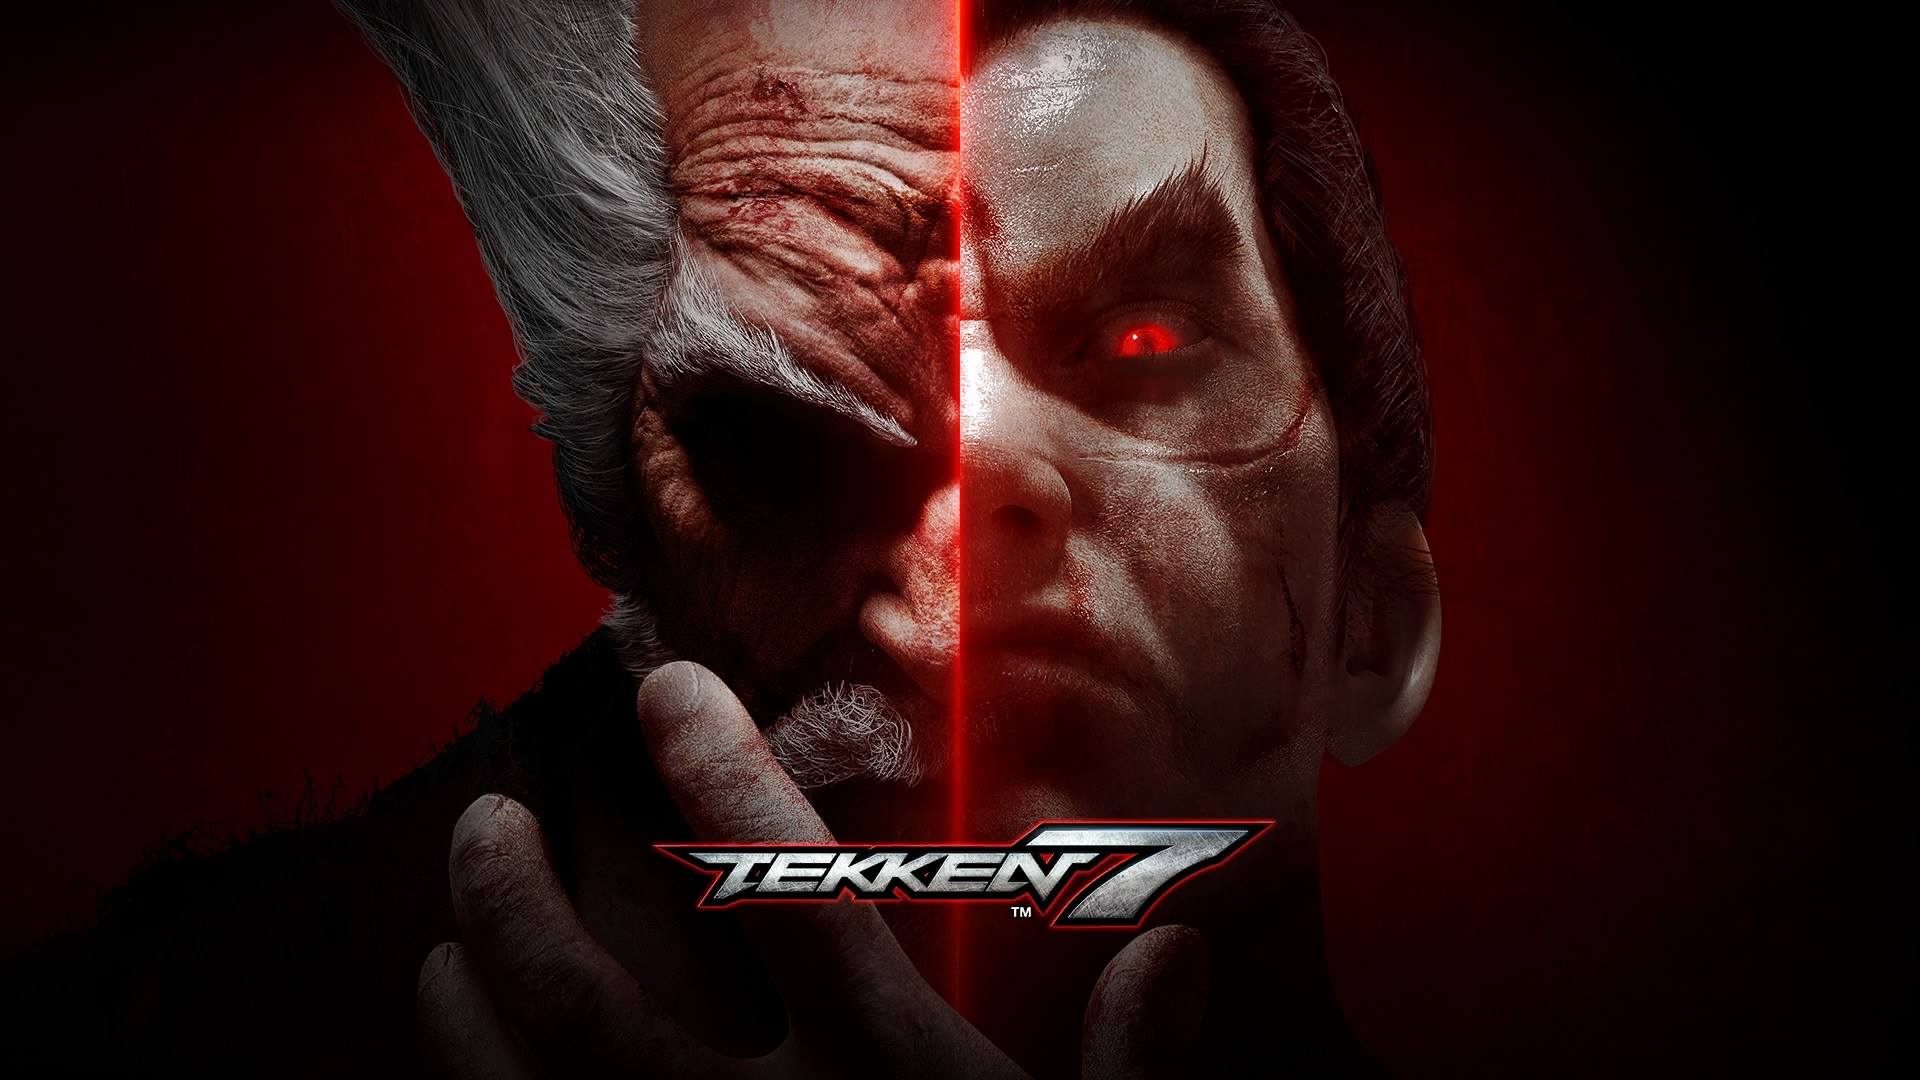 Marduk, Armor King and Julia join the battle in Tekken 7